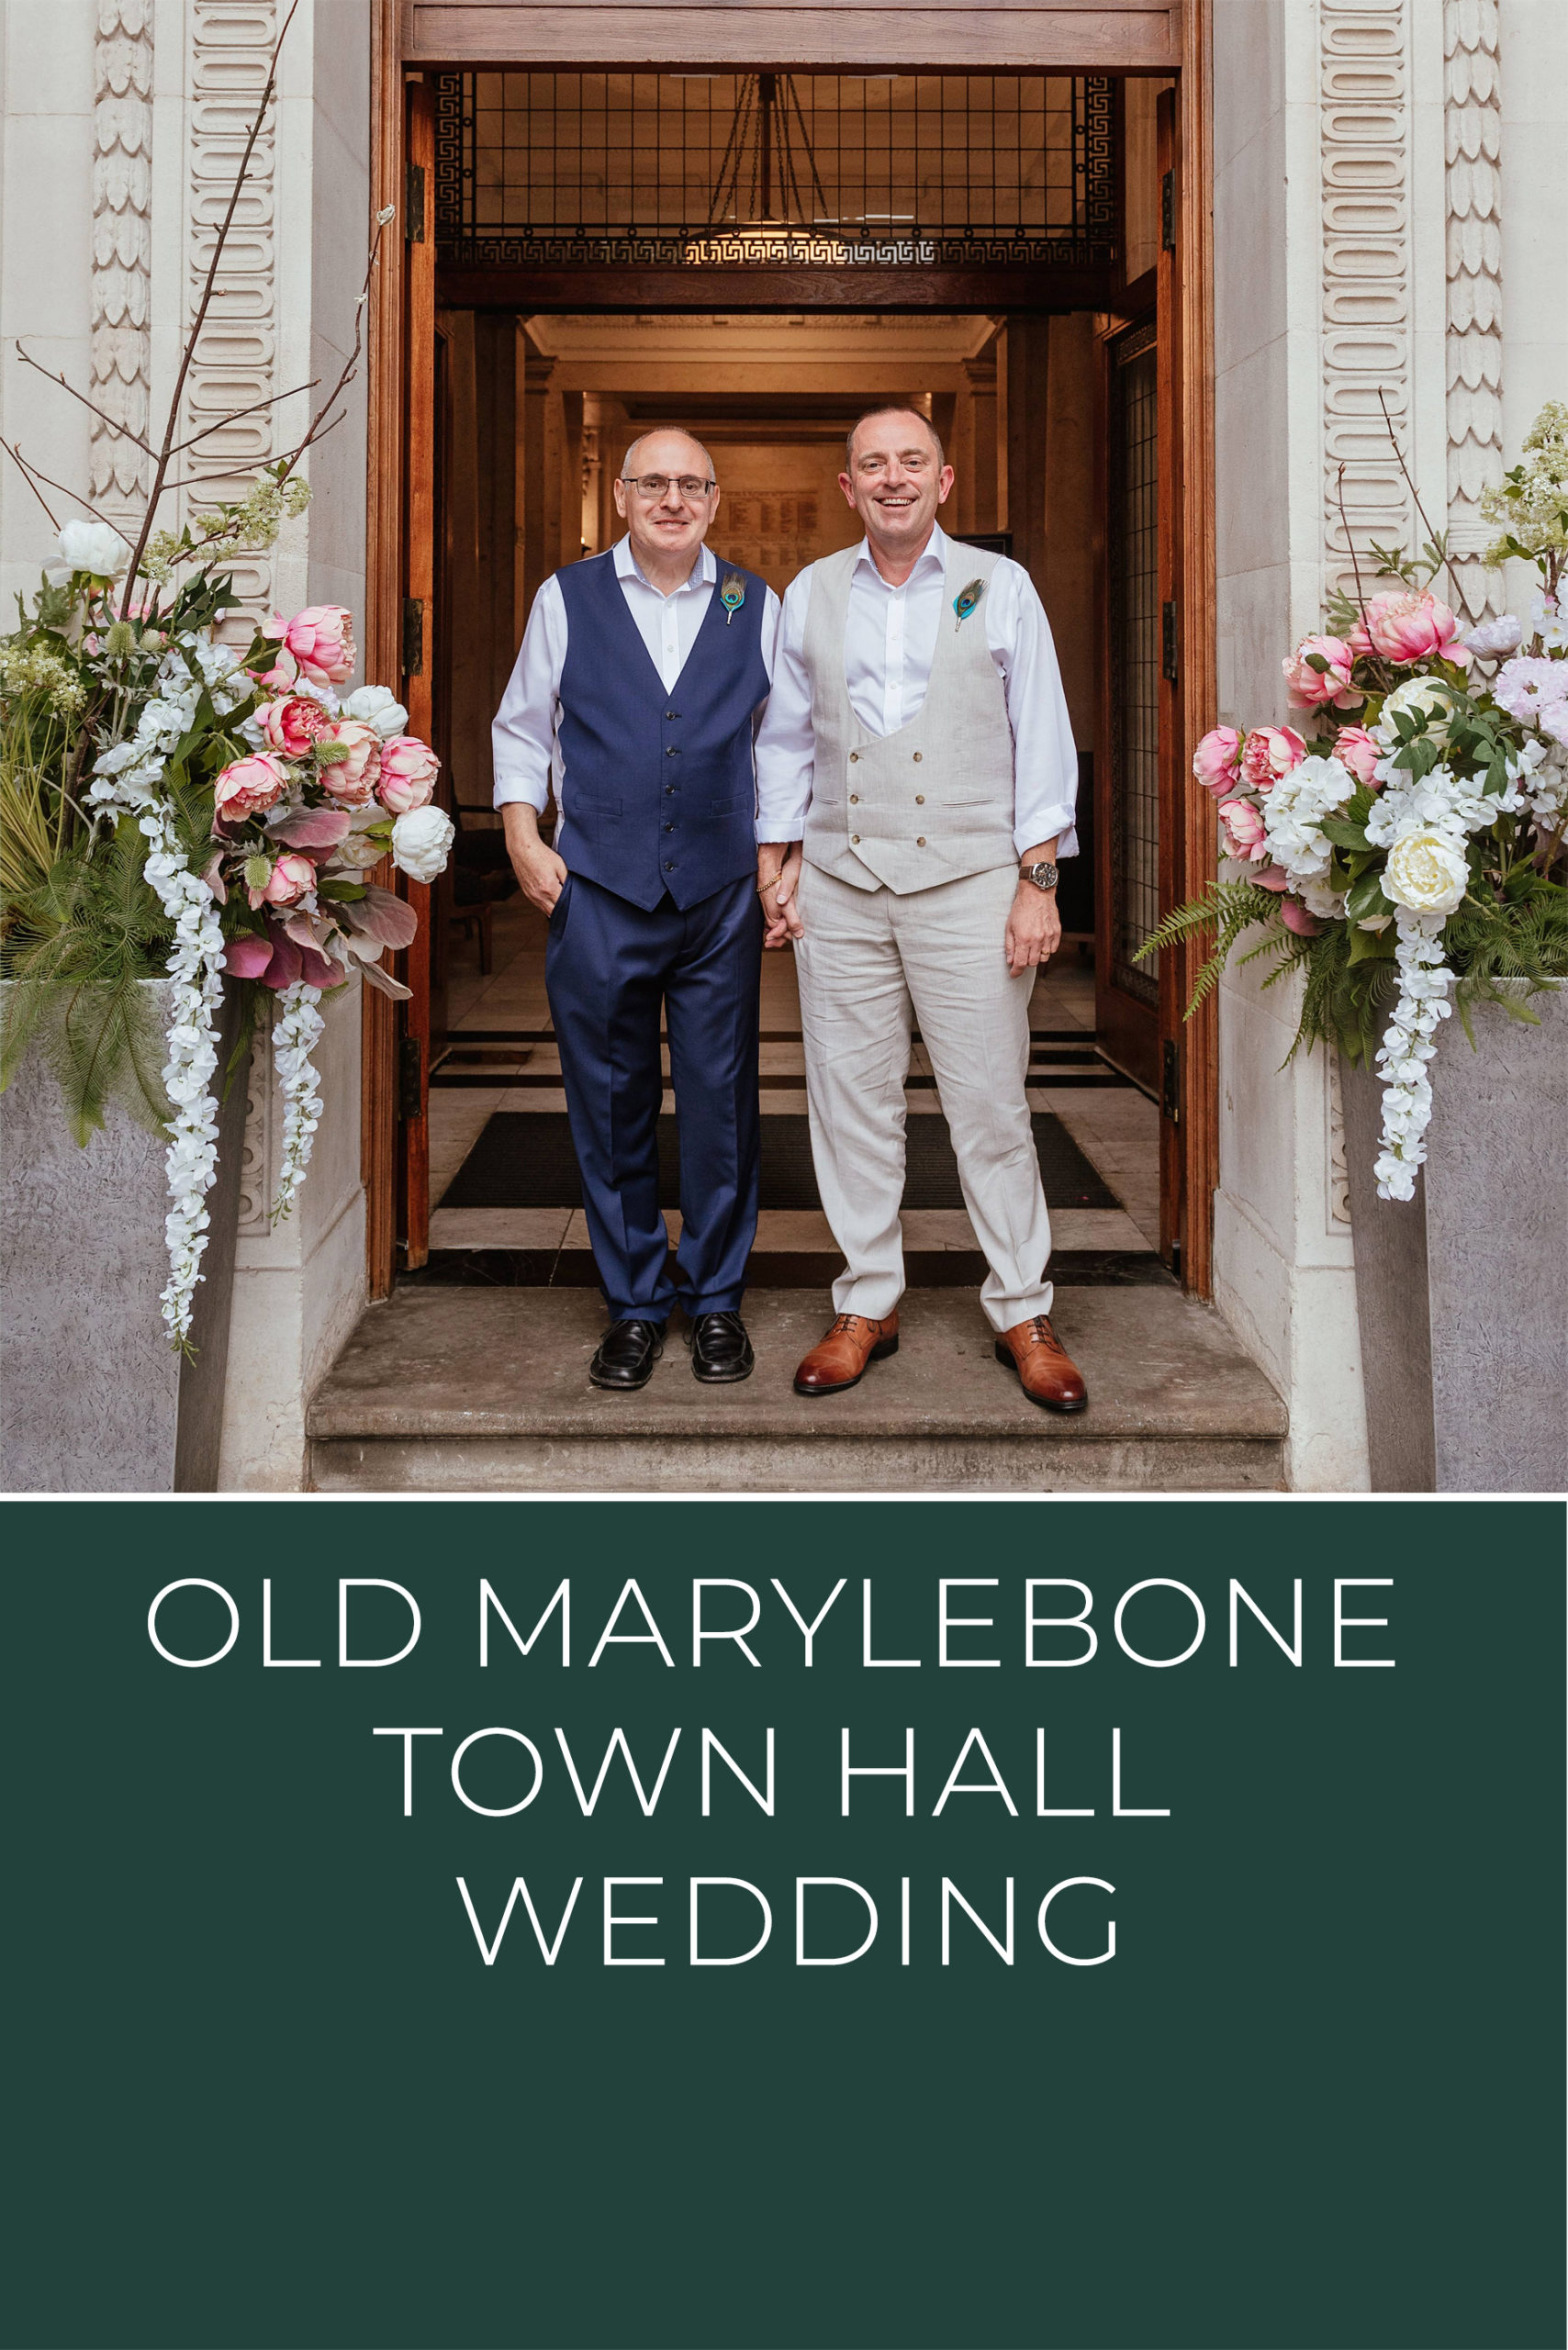 Old Marylebone Town Hall Wedding Pinterest Graphic